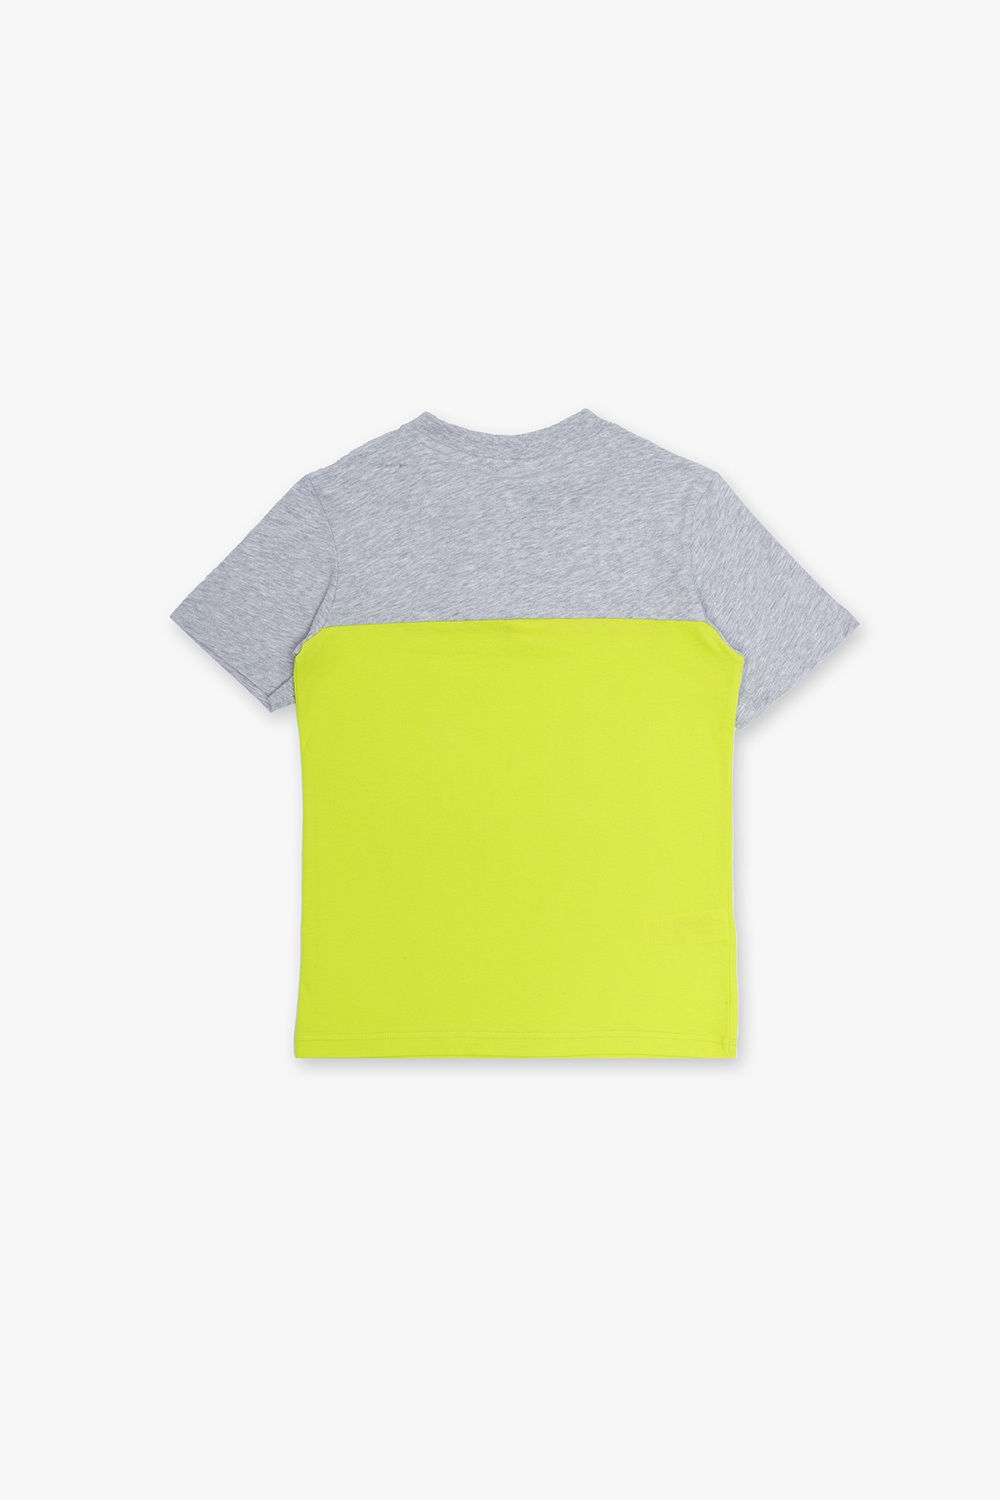 lacoste colour Kids Printed T-shirt